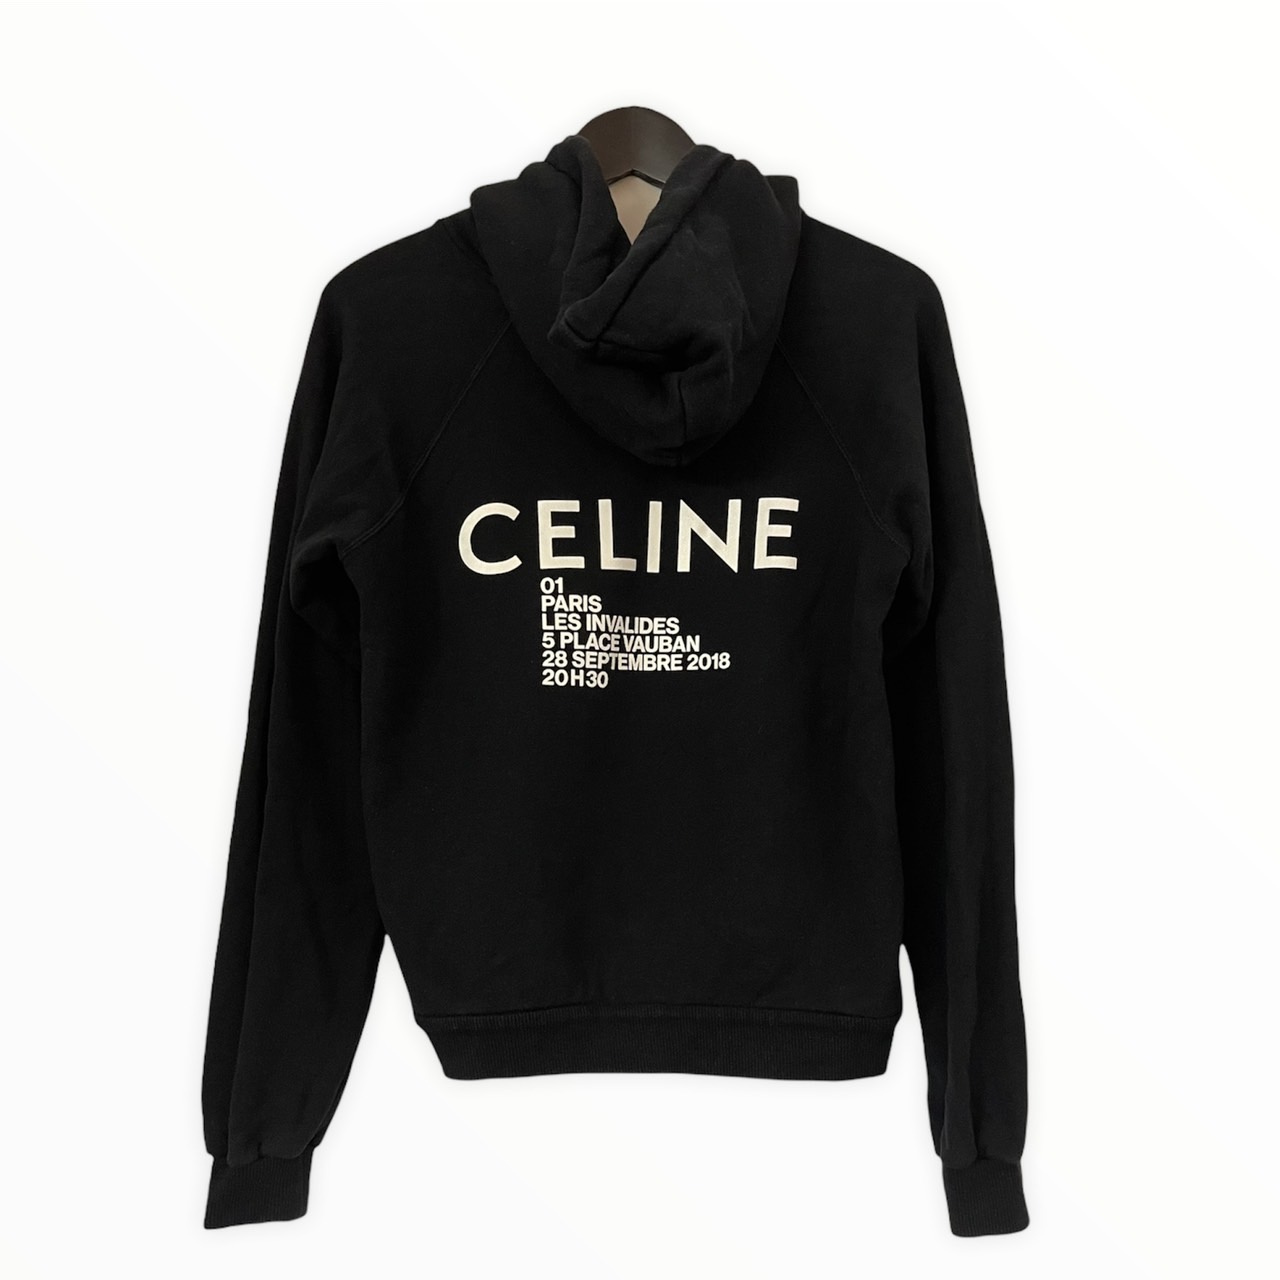 CELINE セリーヌ ロゴ パーカー ブラックMサイズ 在庫処分価格 icqn.de